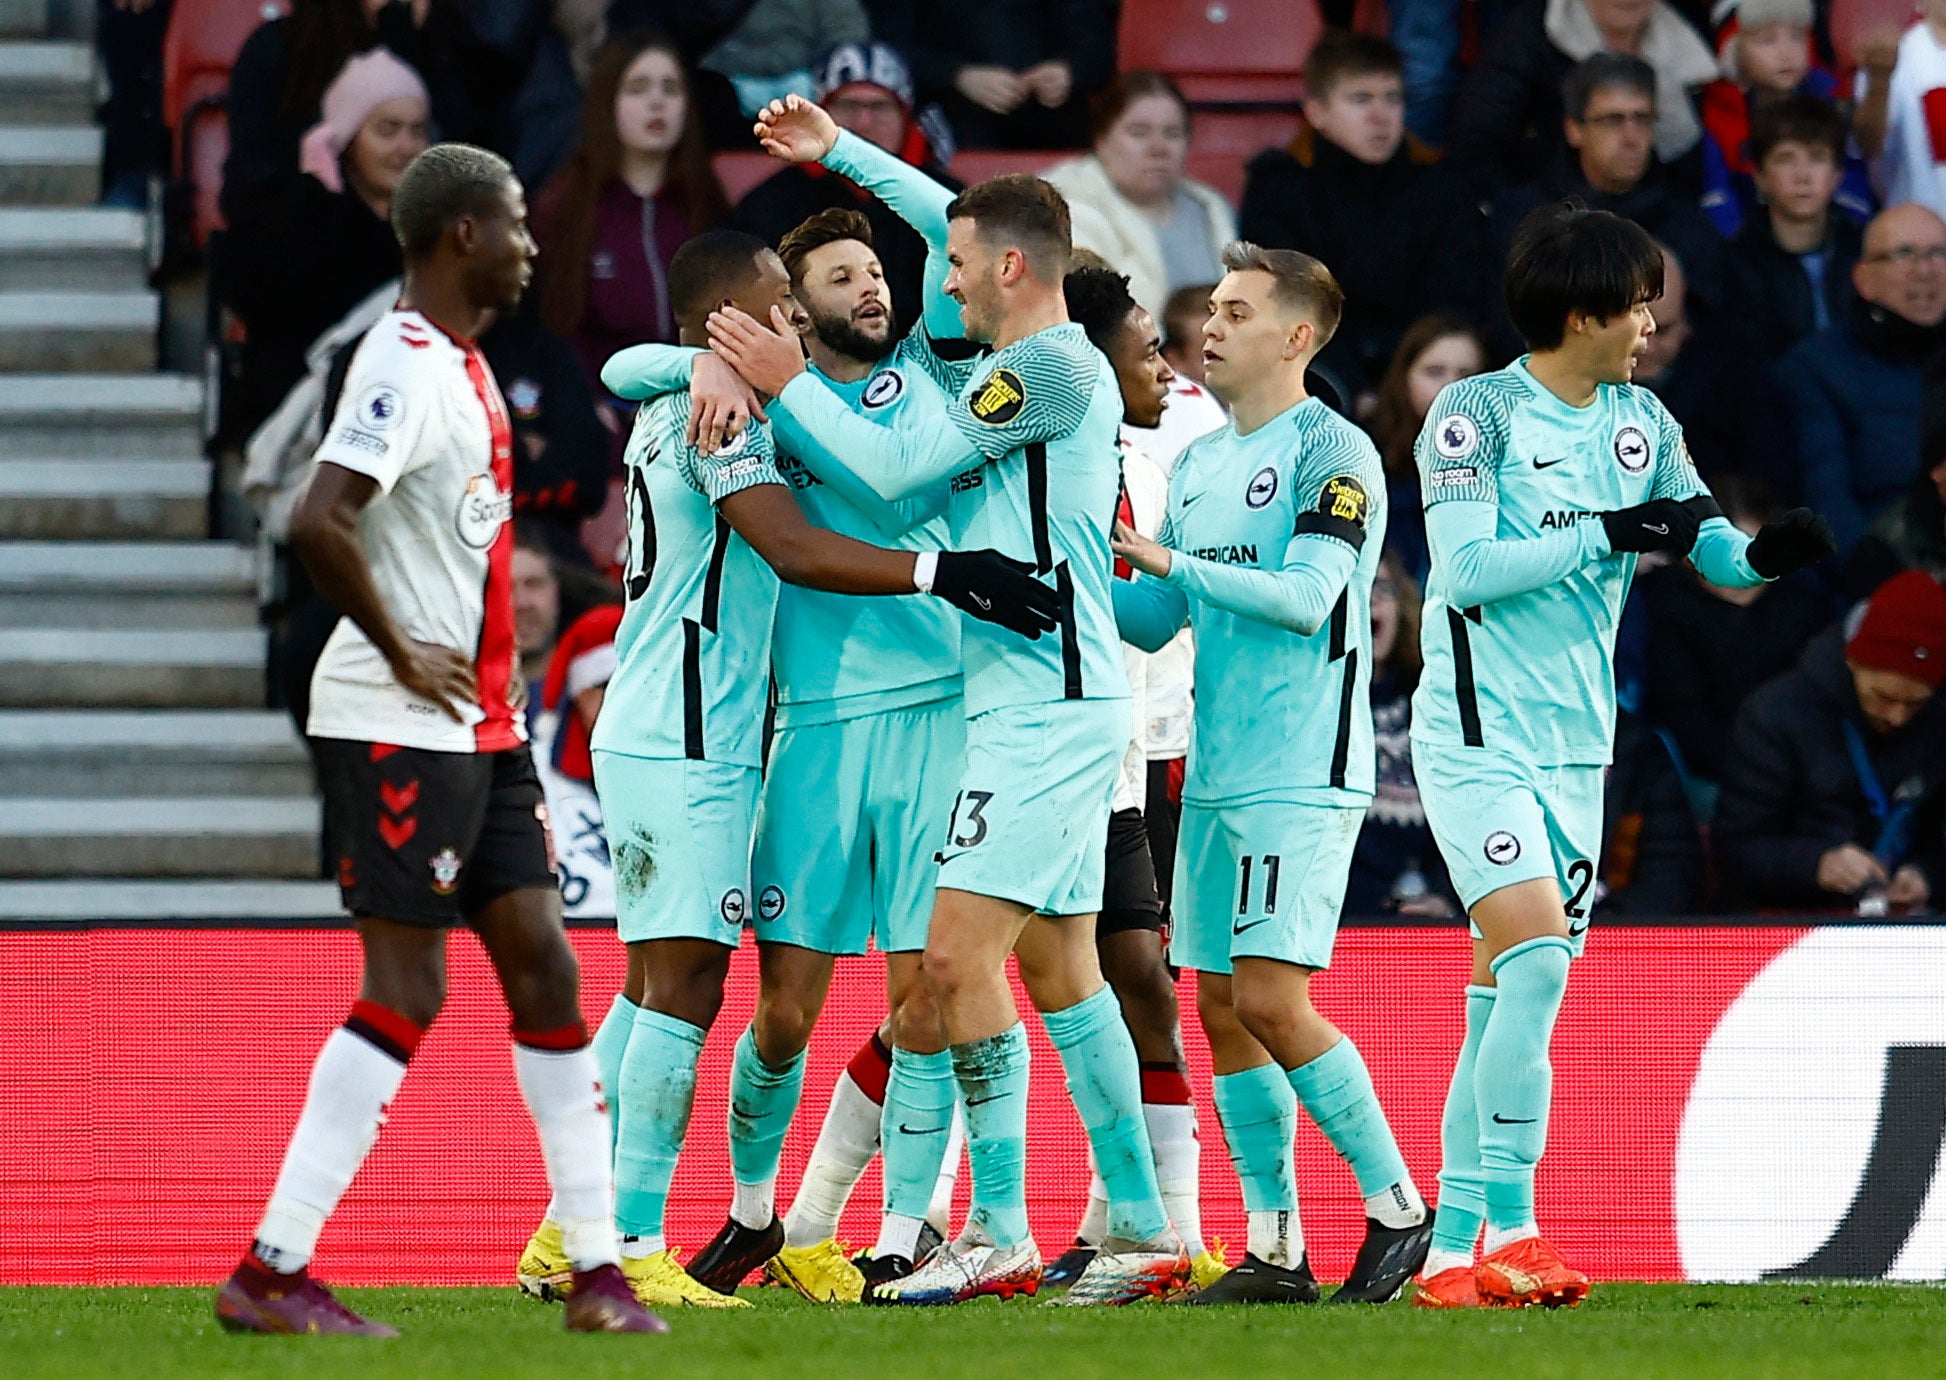 Brighton celebrate after scoring against Southampton